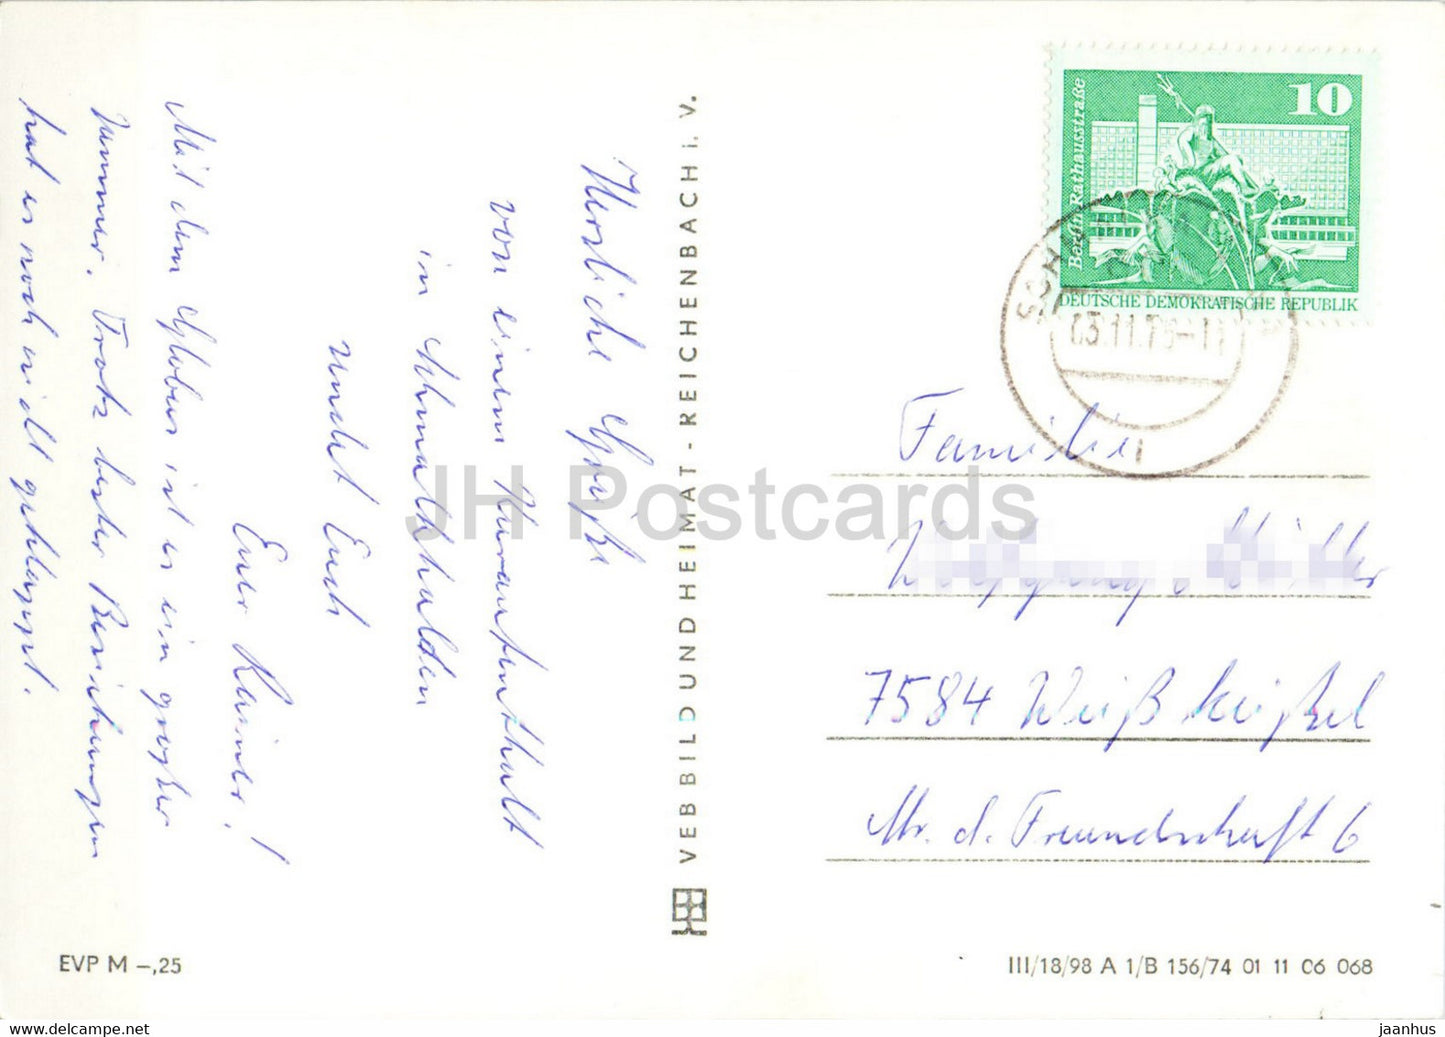 Schmalkalden - Schloss Wilhelmsburg - Altmarkt - castle - old postcard - Germany DDR - used